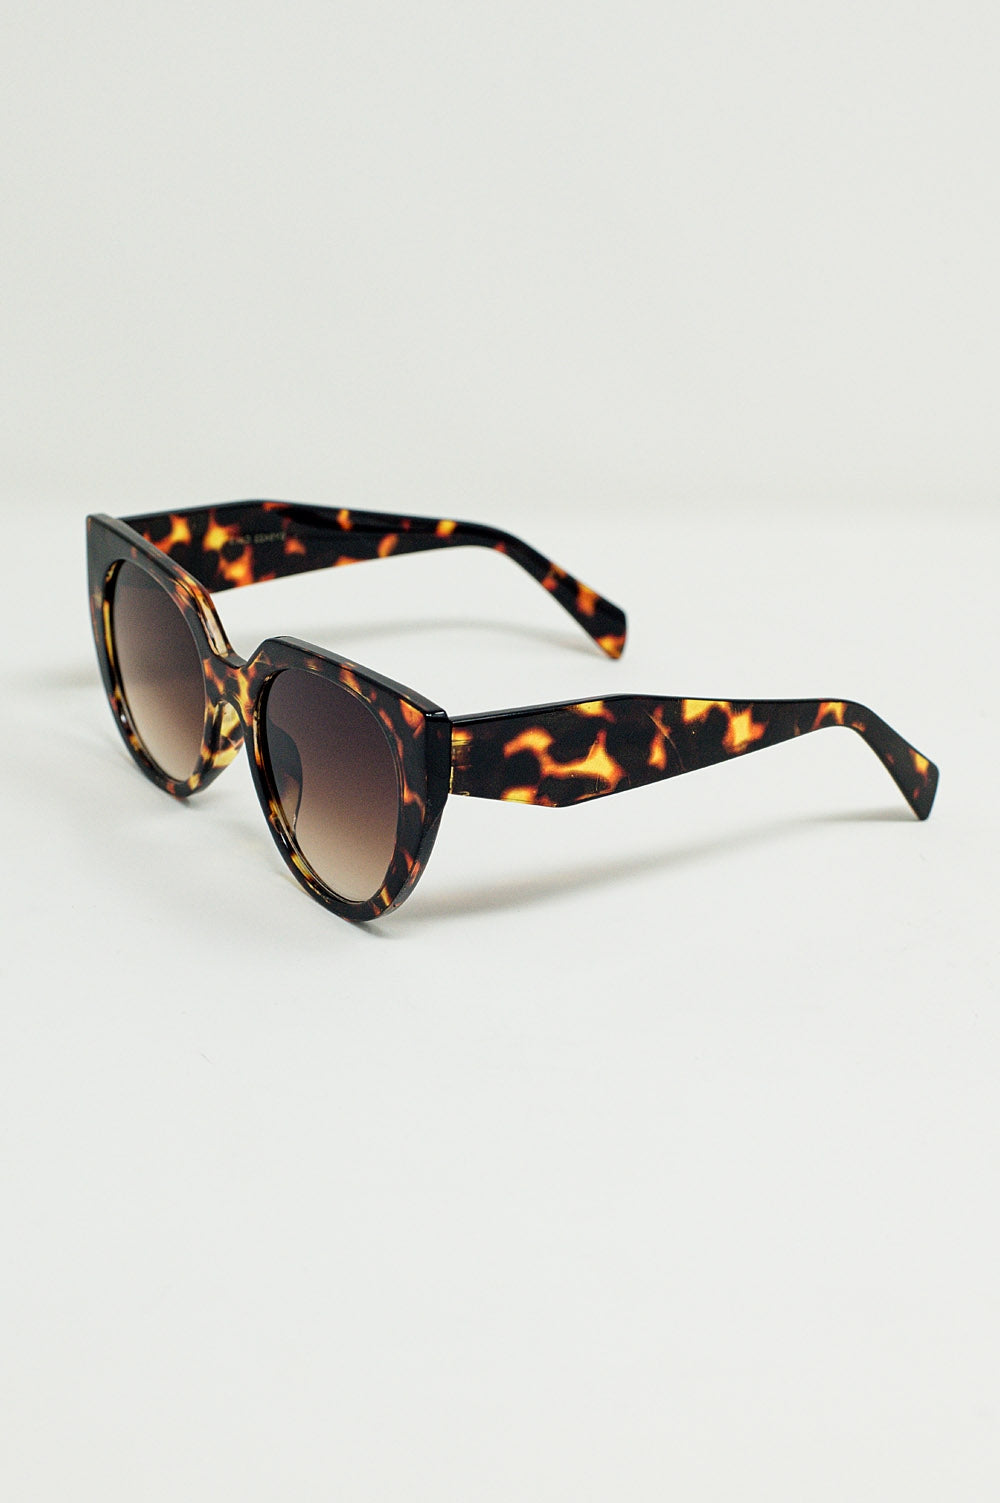 Q2 Oversized Cat Eye Sunglasses With Wide Rim in Tortoise Shell